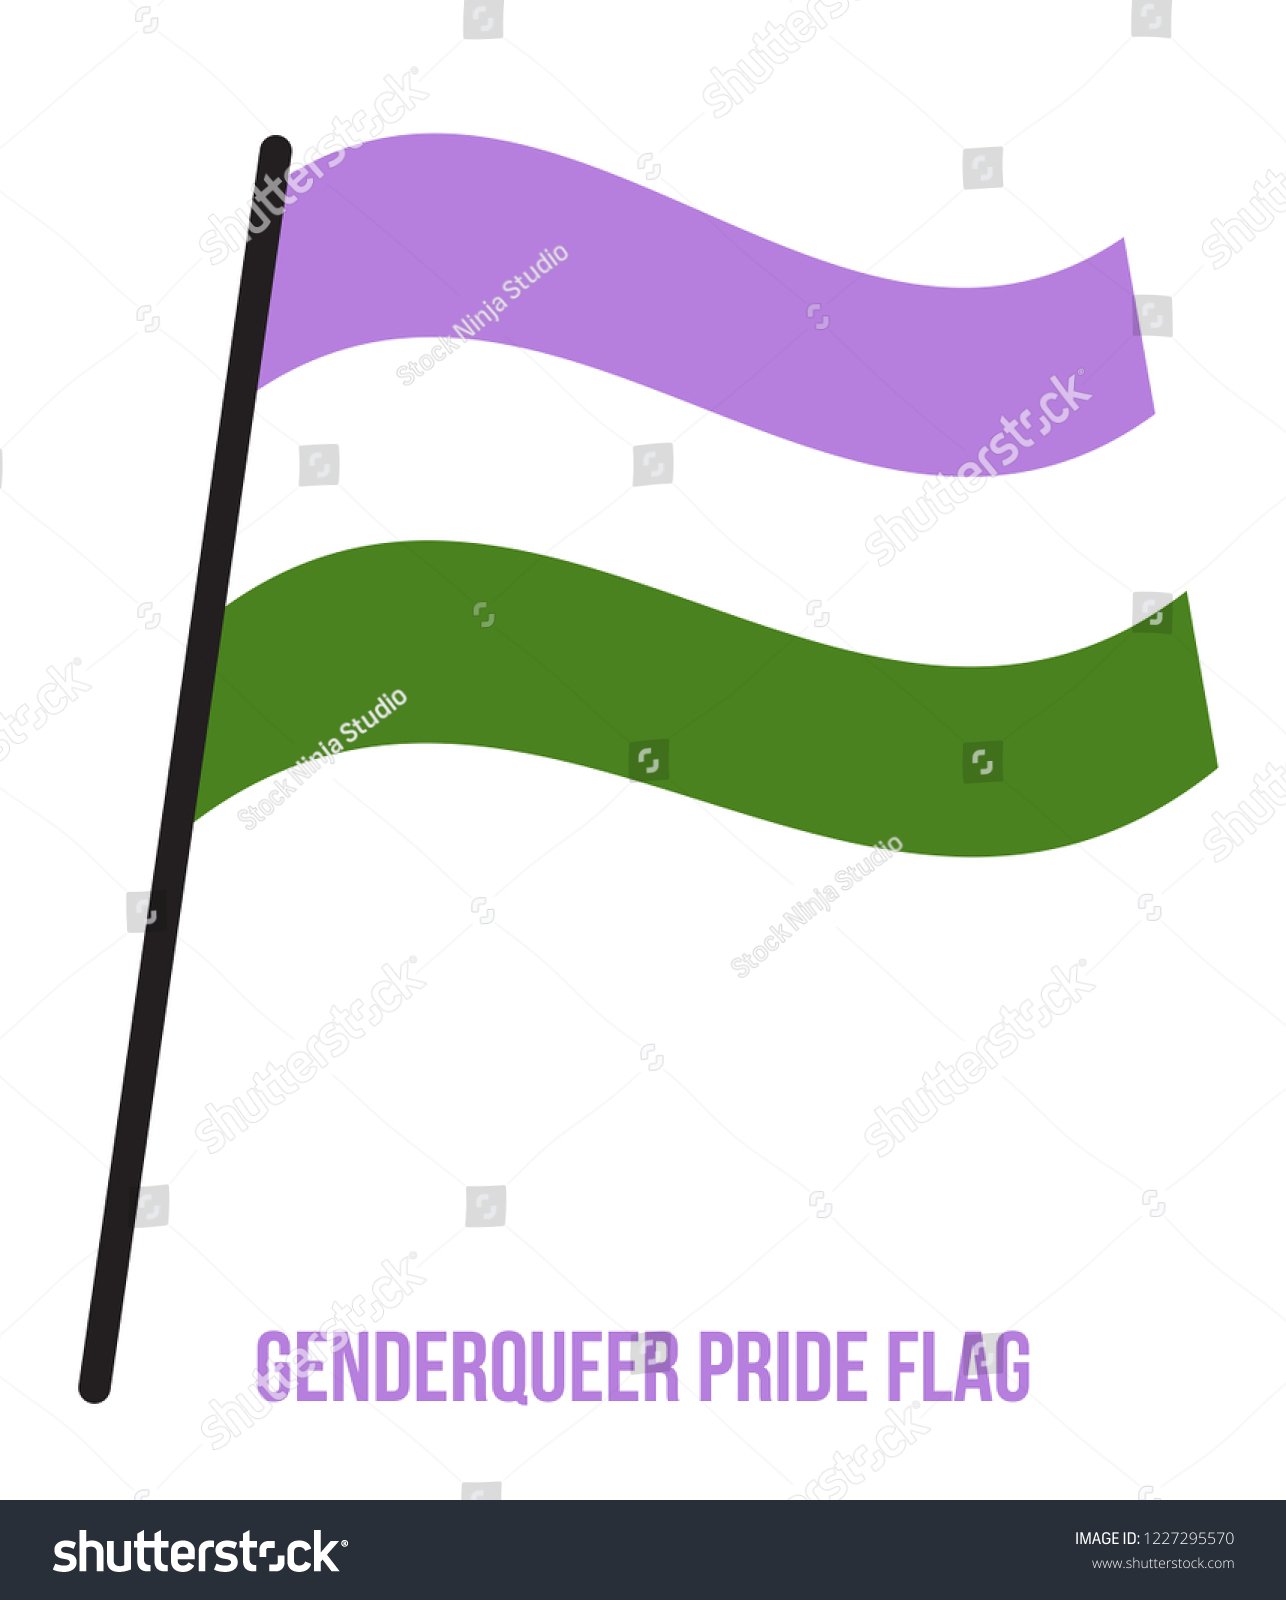 Genderqueer Pride Flag Waving Vector Illustration เวกเตอร์สต็อก ปลอด 7268